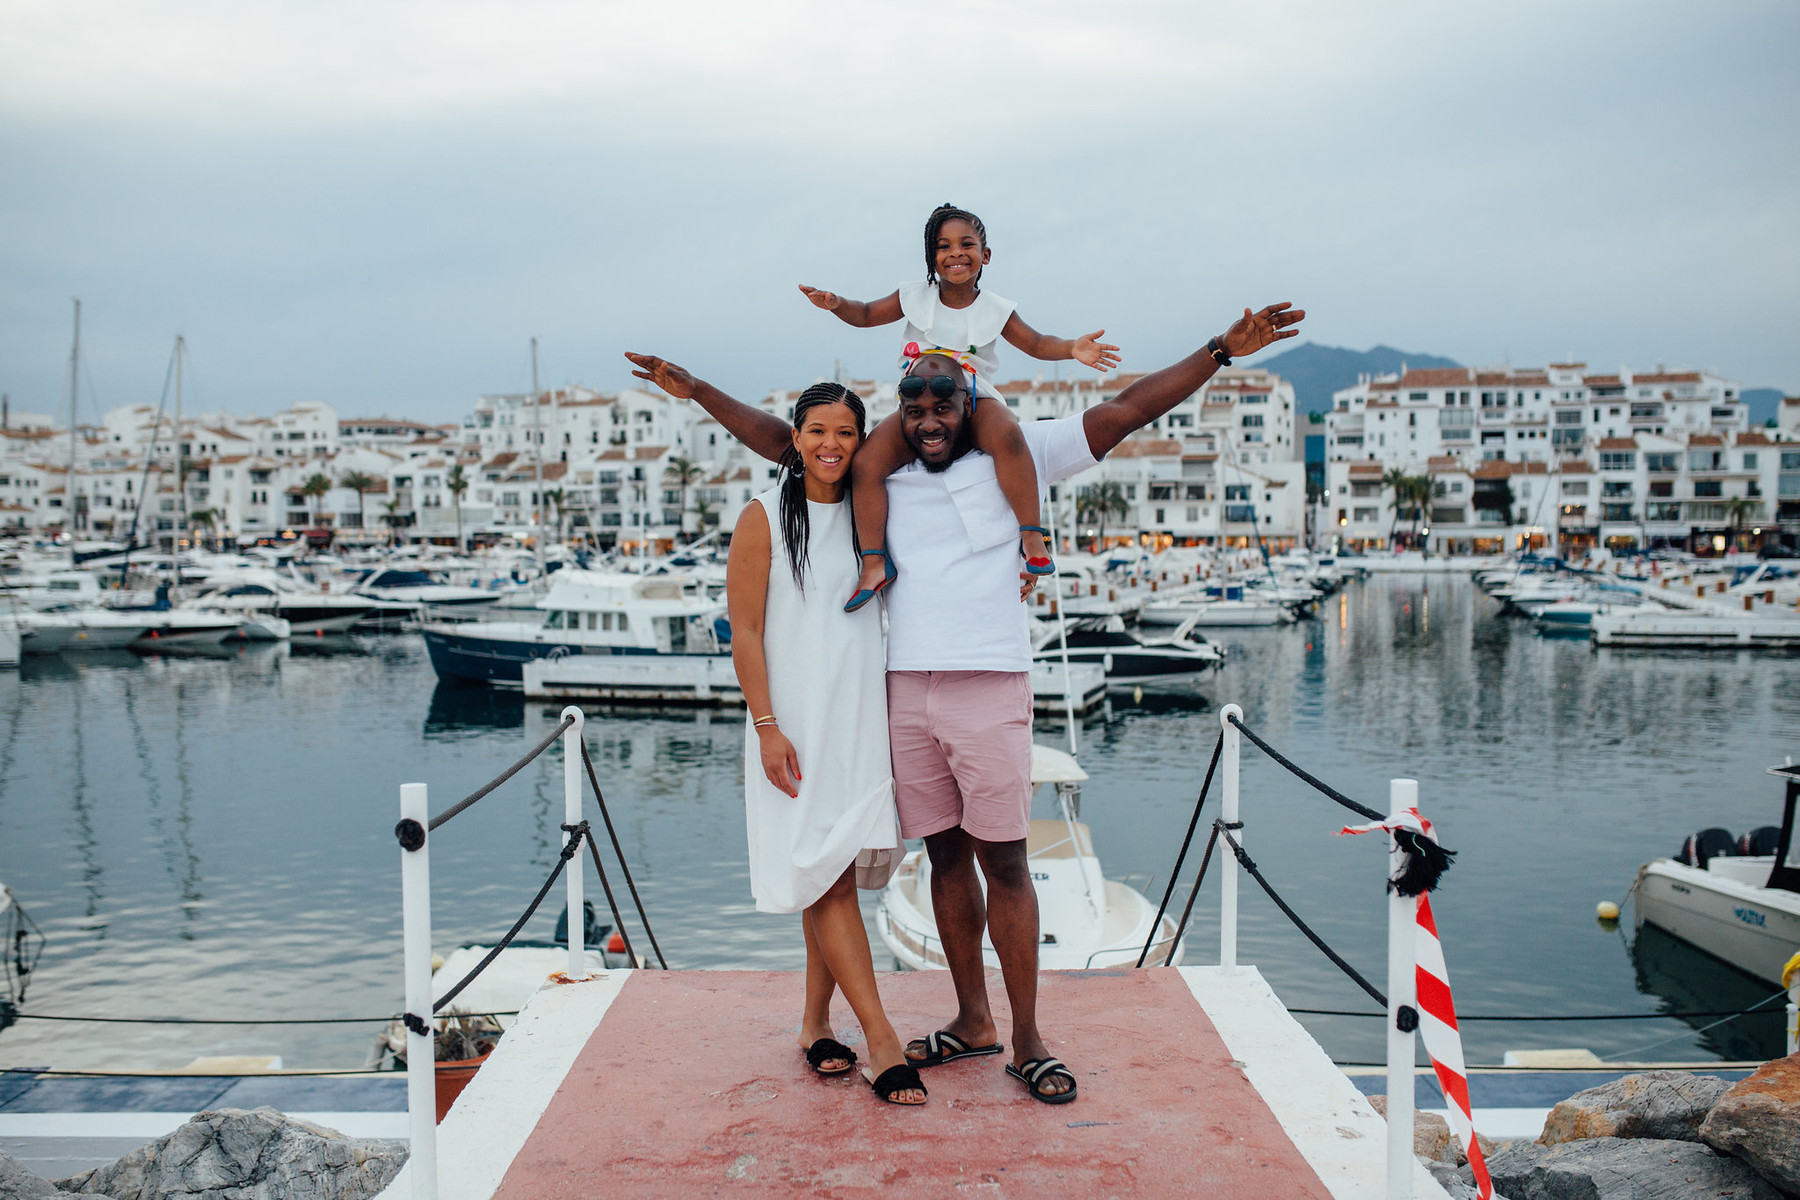 Family photo shooting in the Port Banus in Marbella